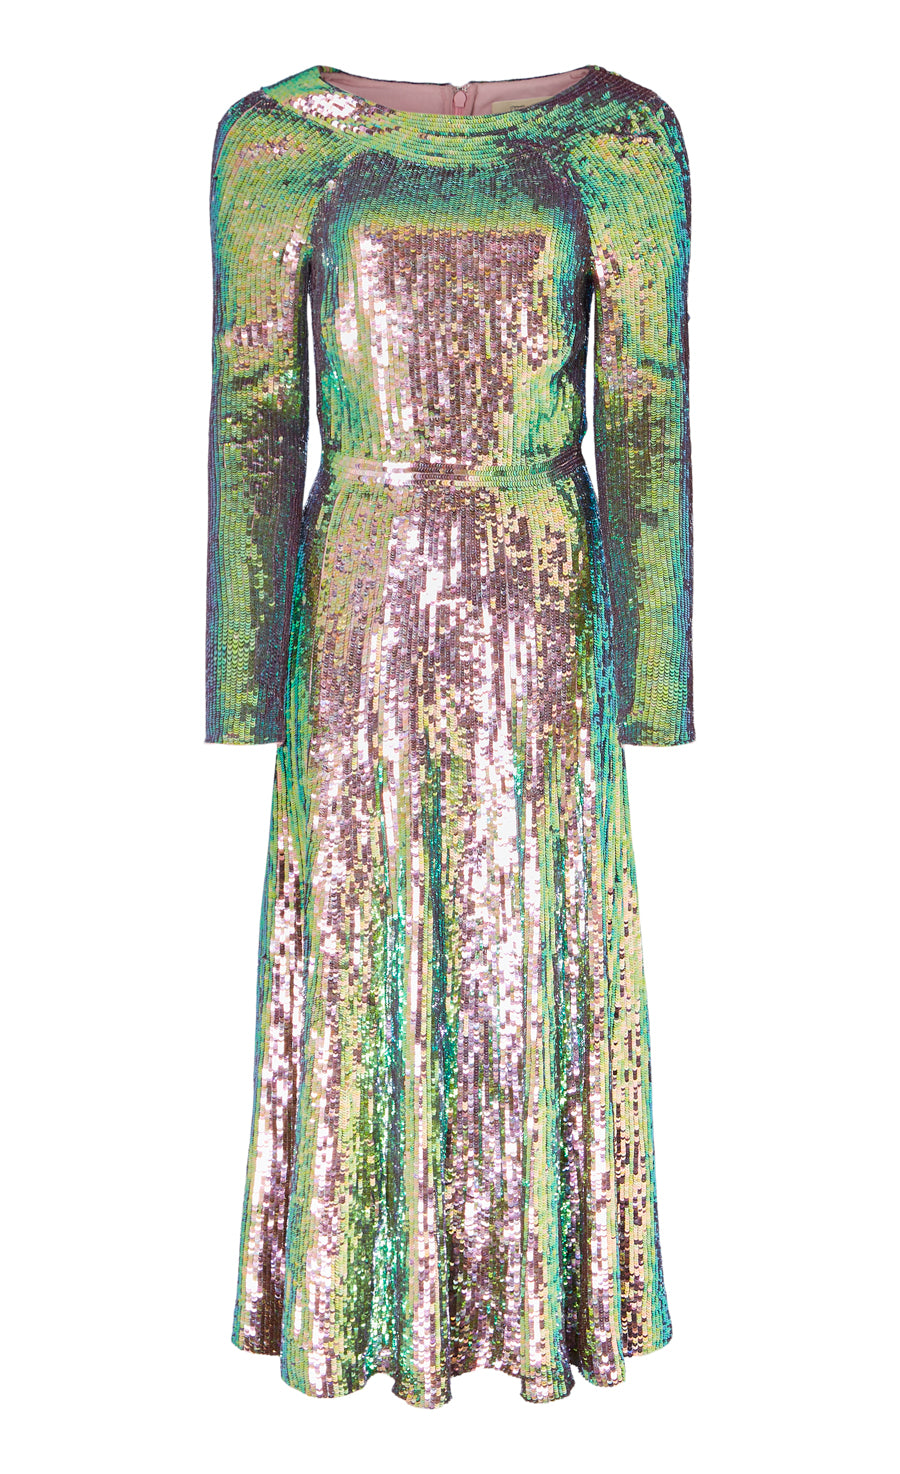 Ray Sequin Dress - Iridescent Khaki